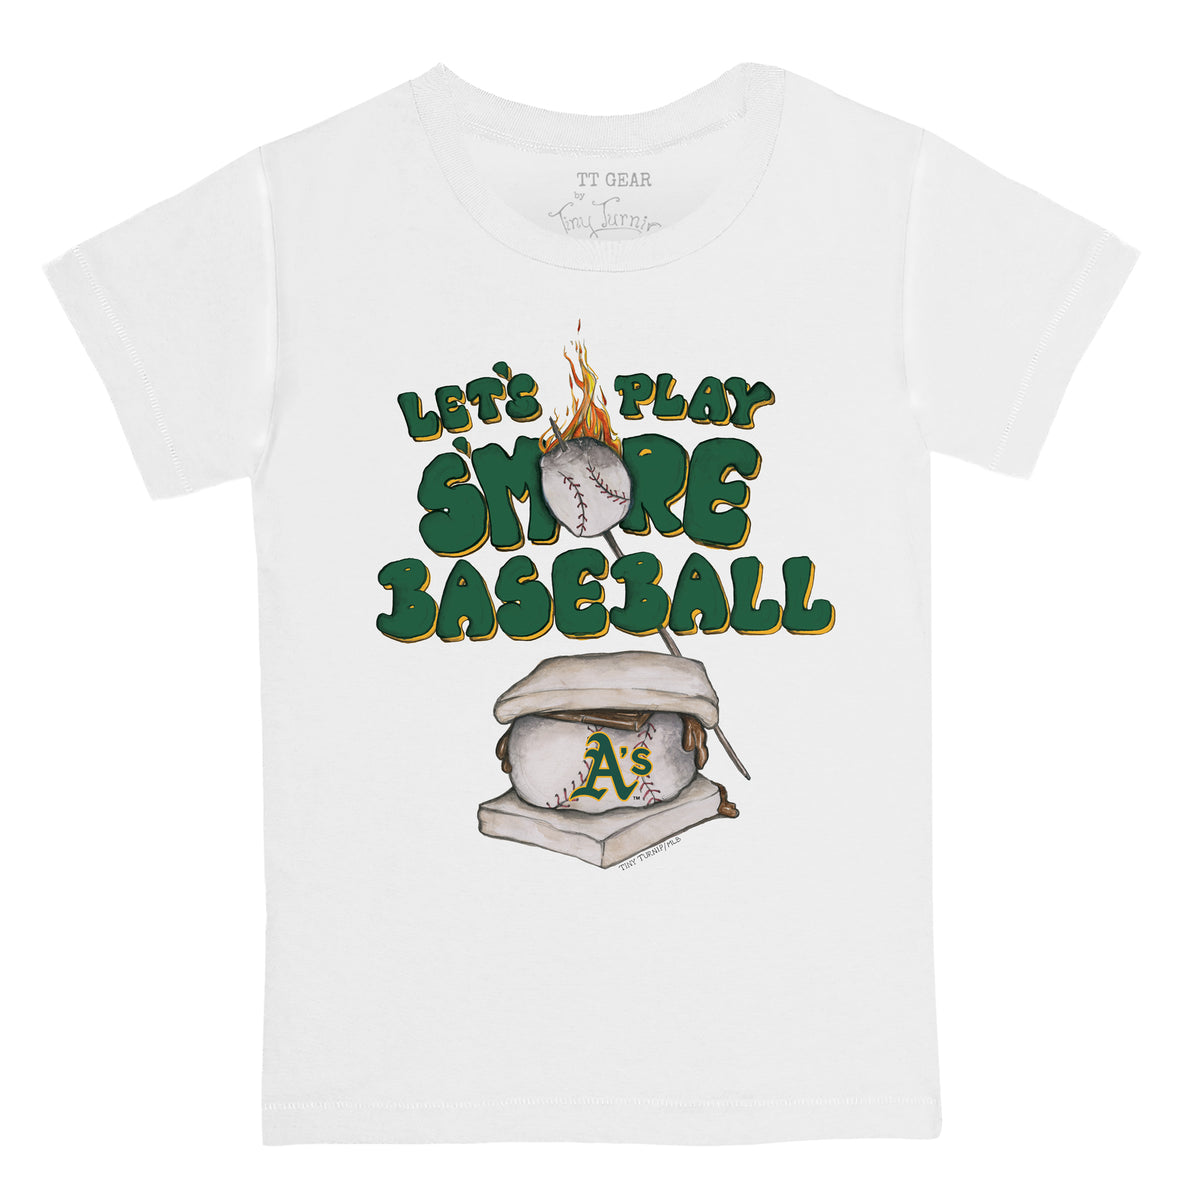 Oakland Athletics S'mores Tee Shirt